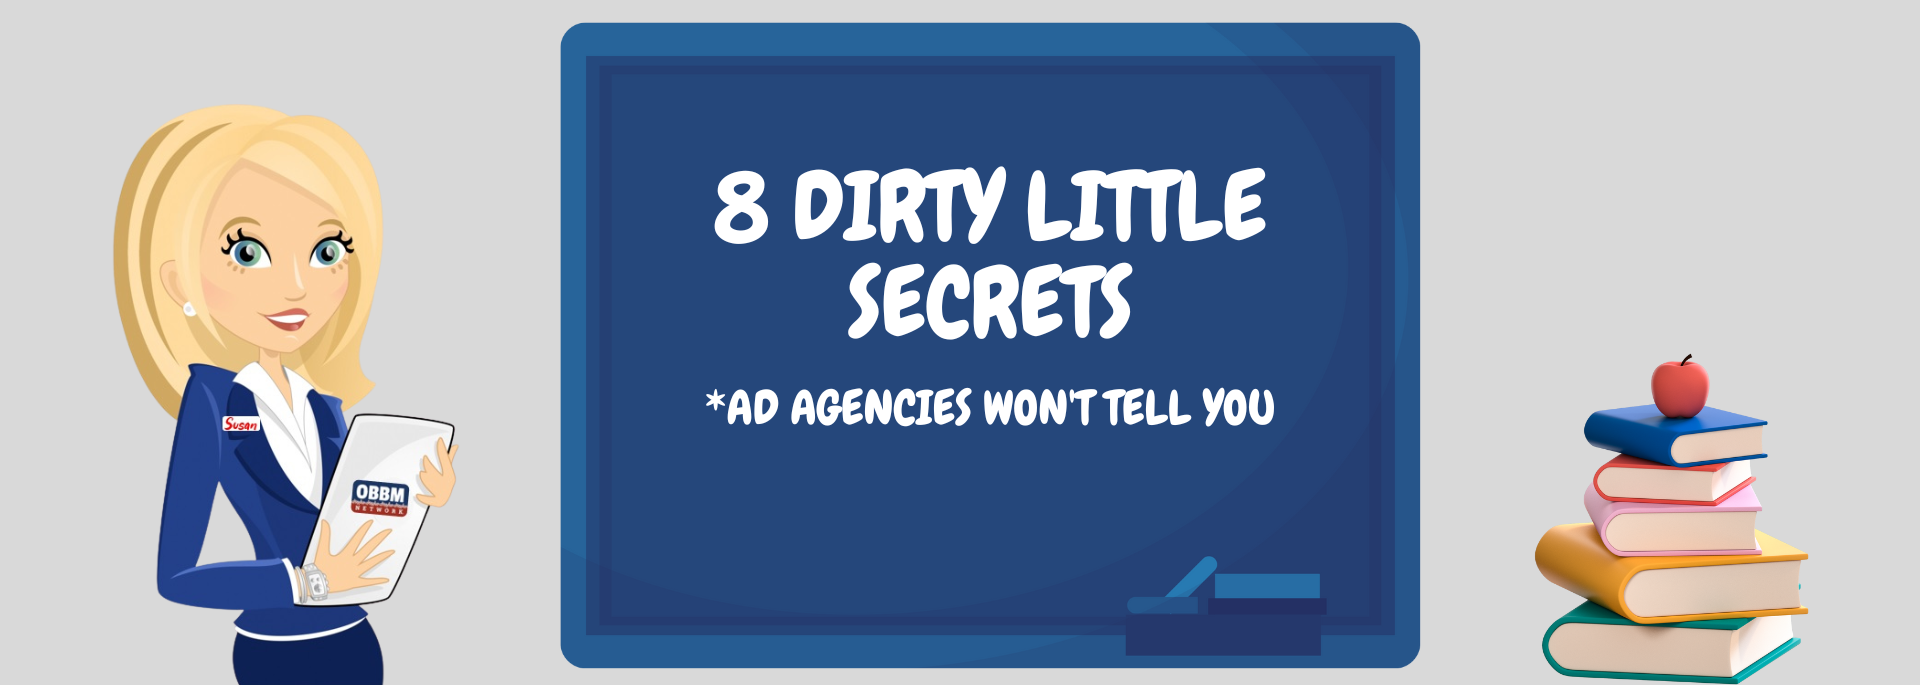 8 Dirty Little Secrets Ad Agencies Won't Tell You